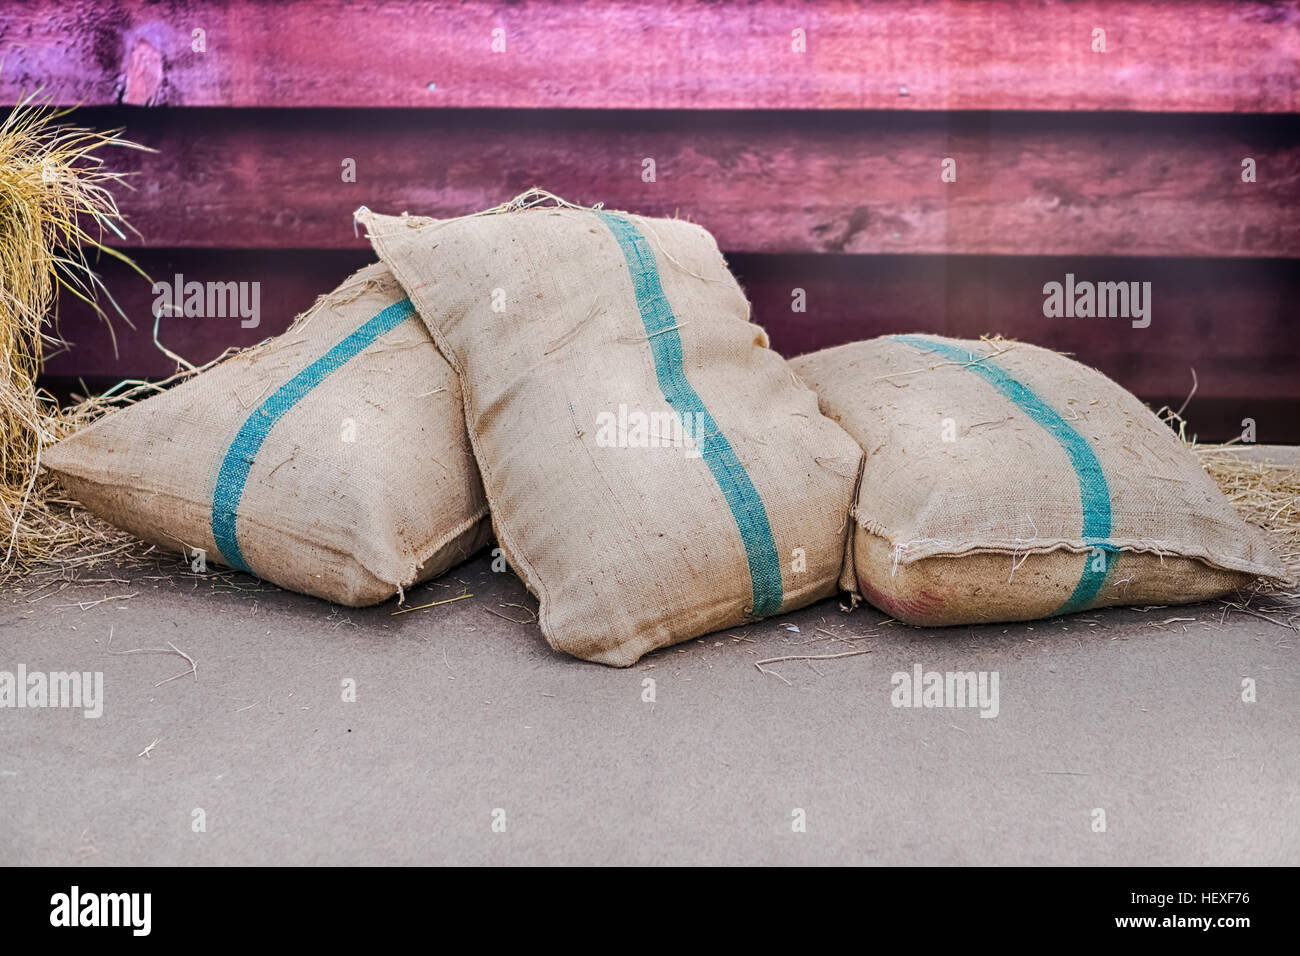 Sacos bolsas de embalaje fotografías e imágenes de alta resolución - Alamy